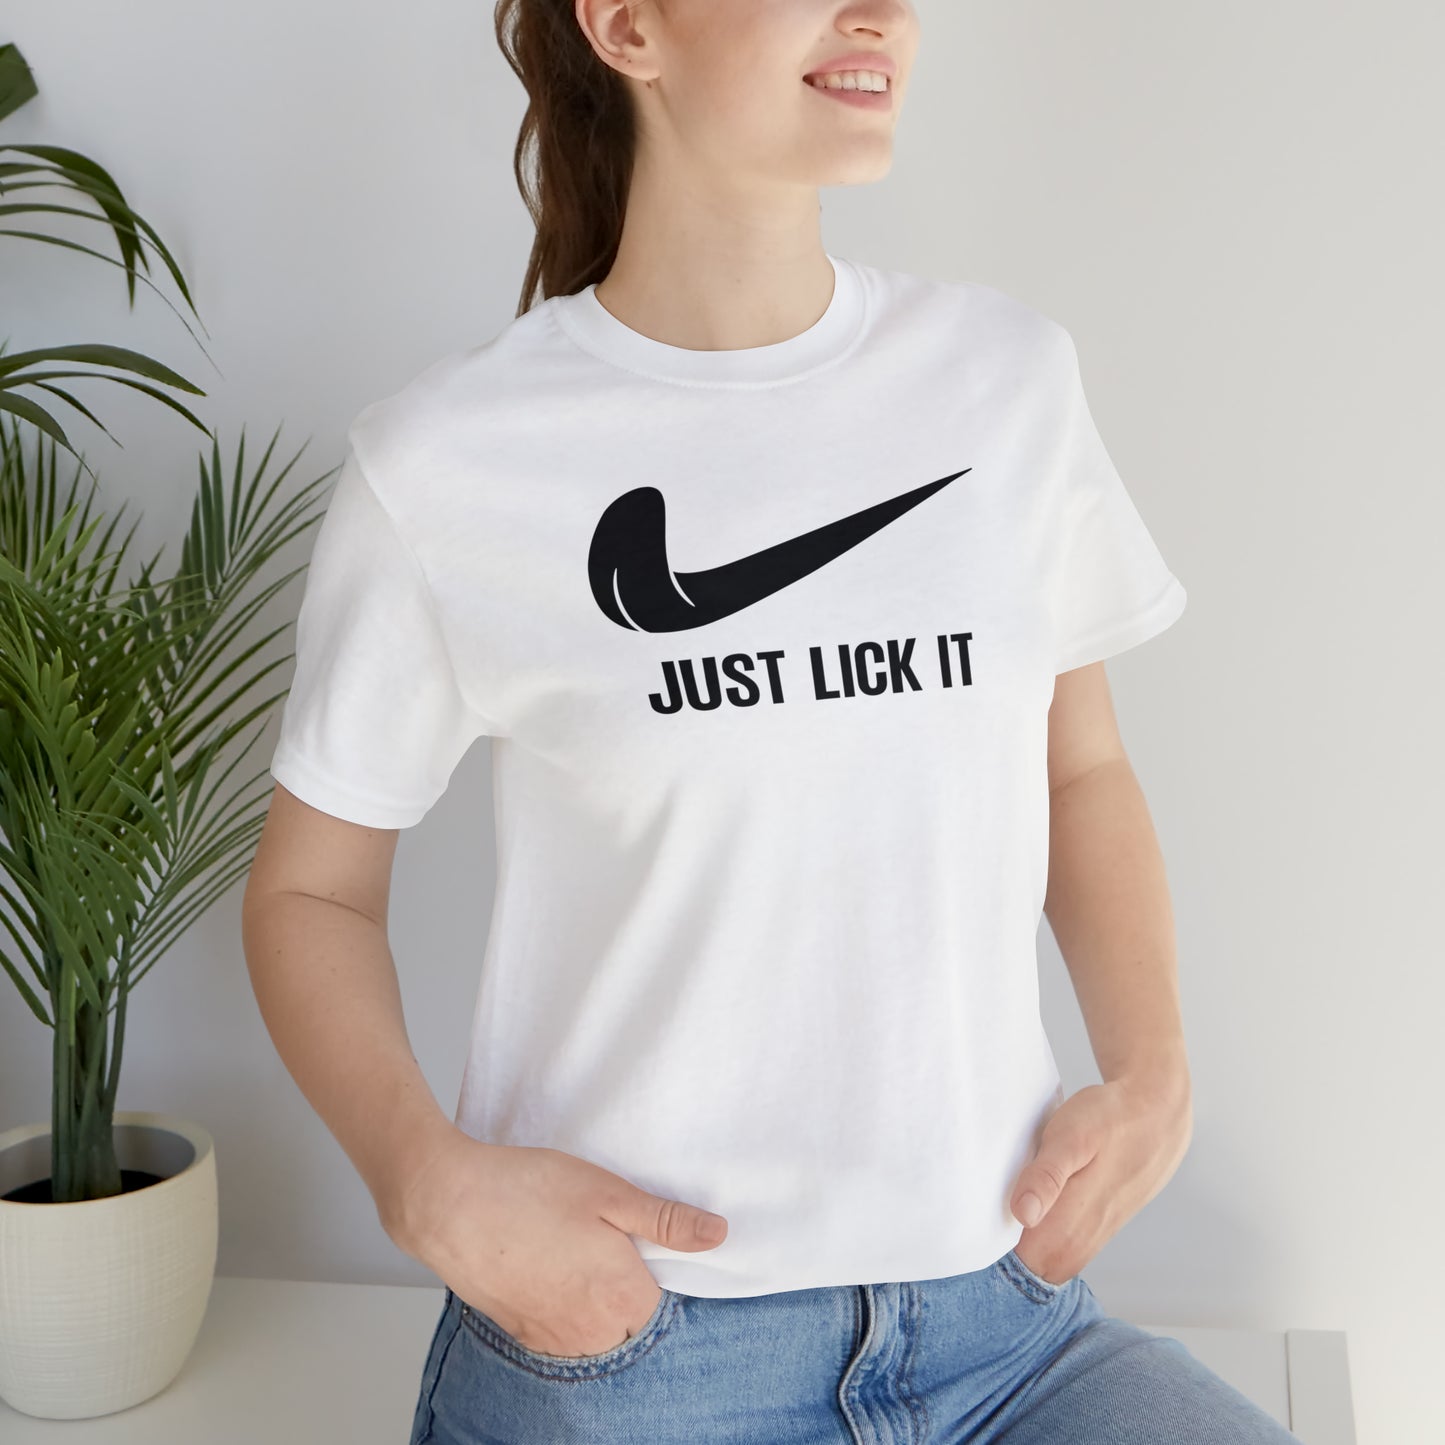 Just Lick It